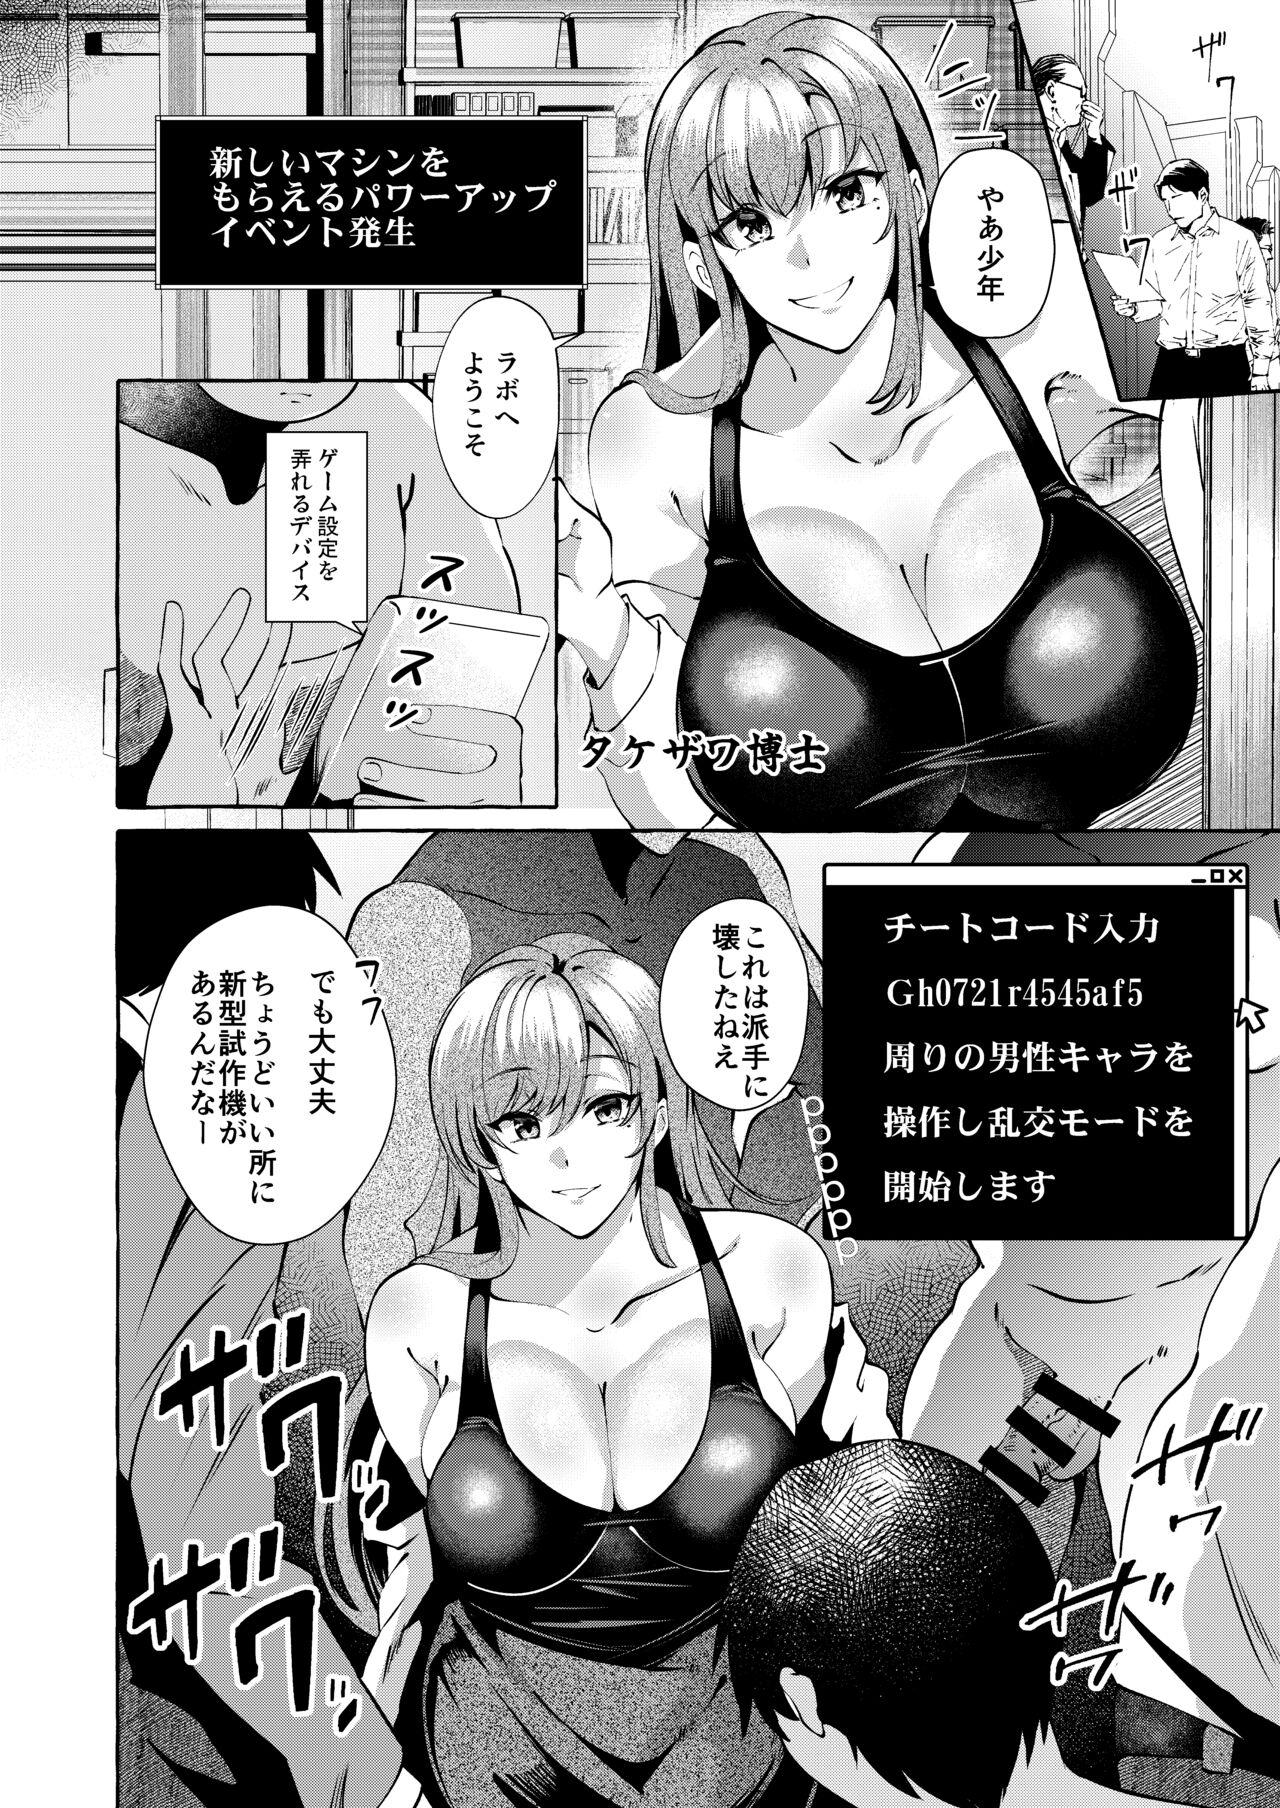 Erotic New Game 2〜 bagura seta geemunara NPC demo yaritaihoudai 〜 24